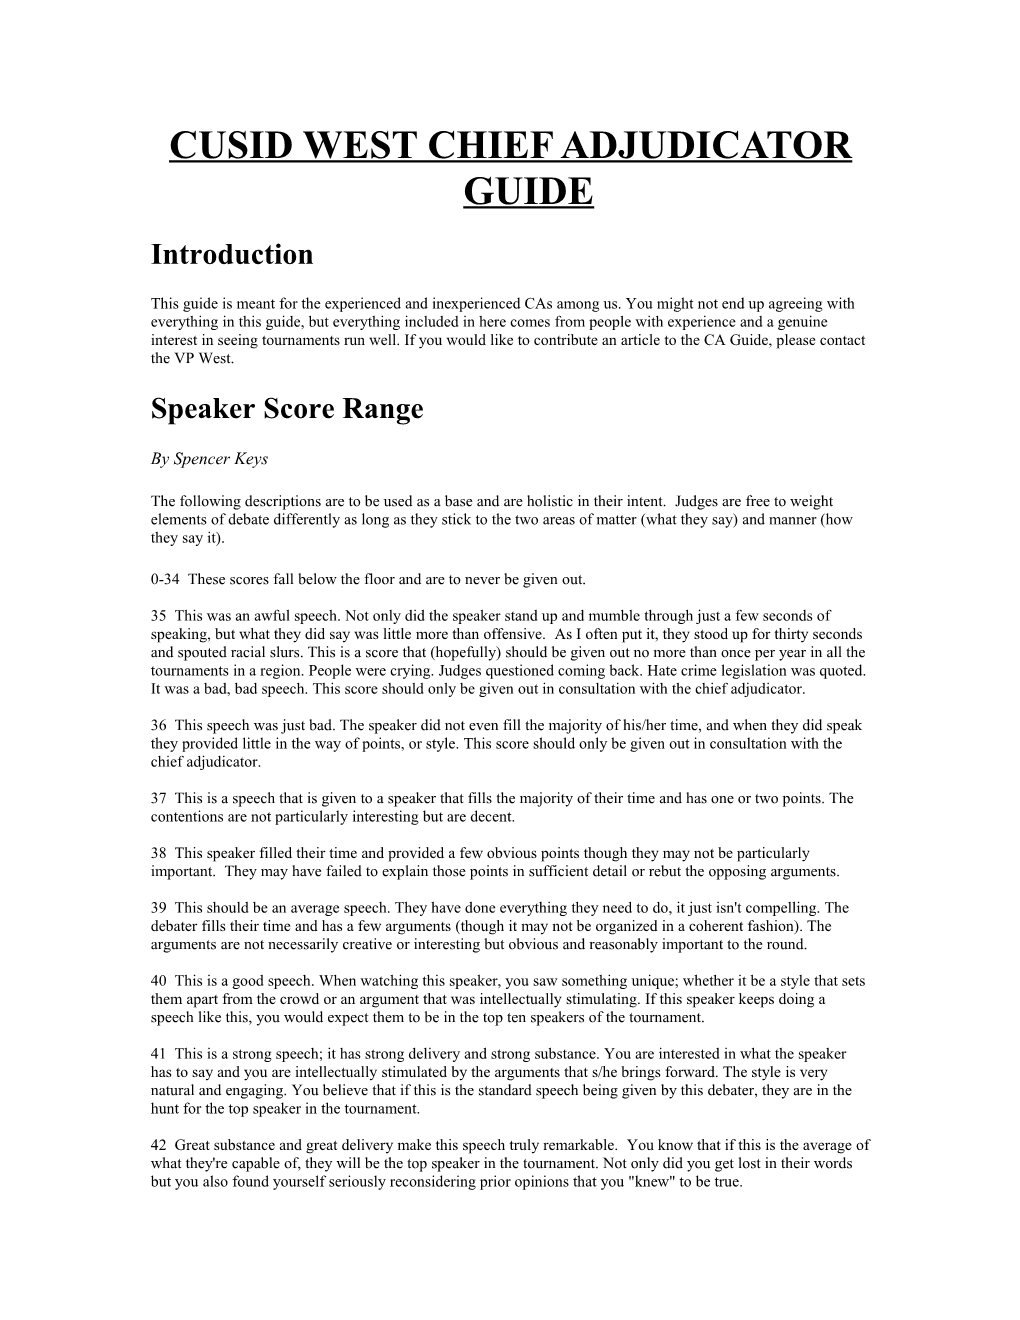 Cusid West Chief Adjudicator Guide